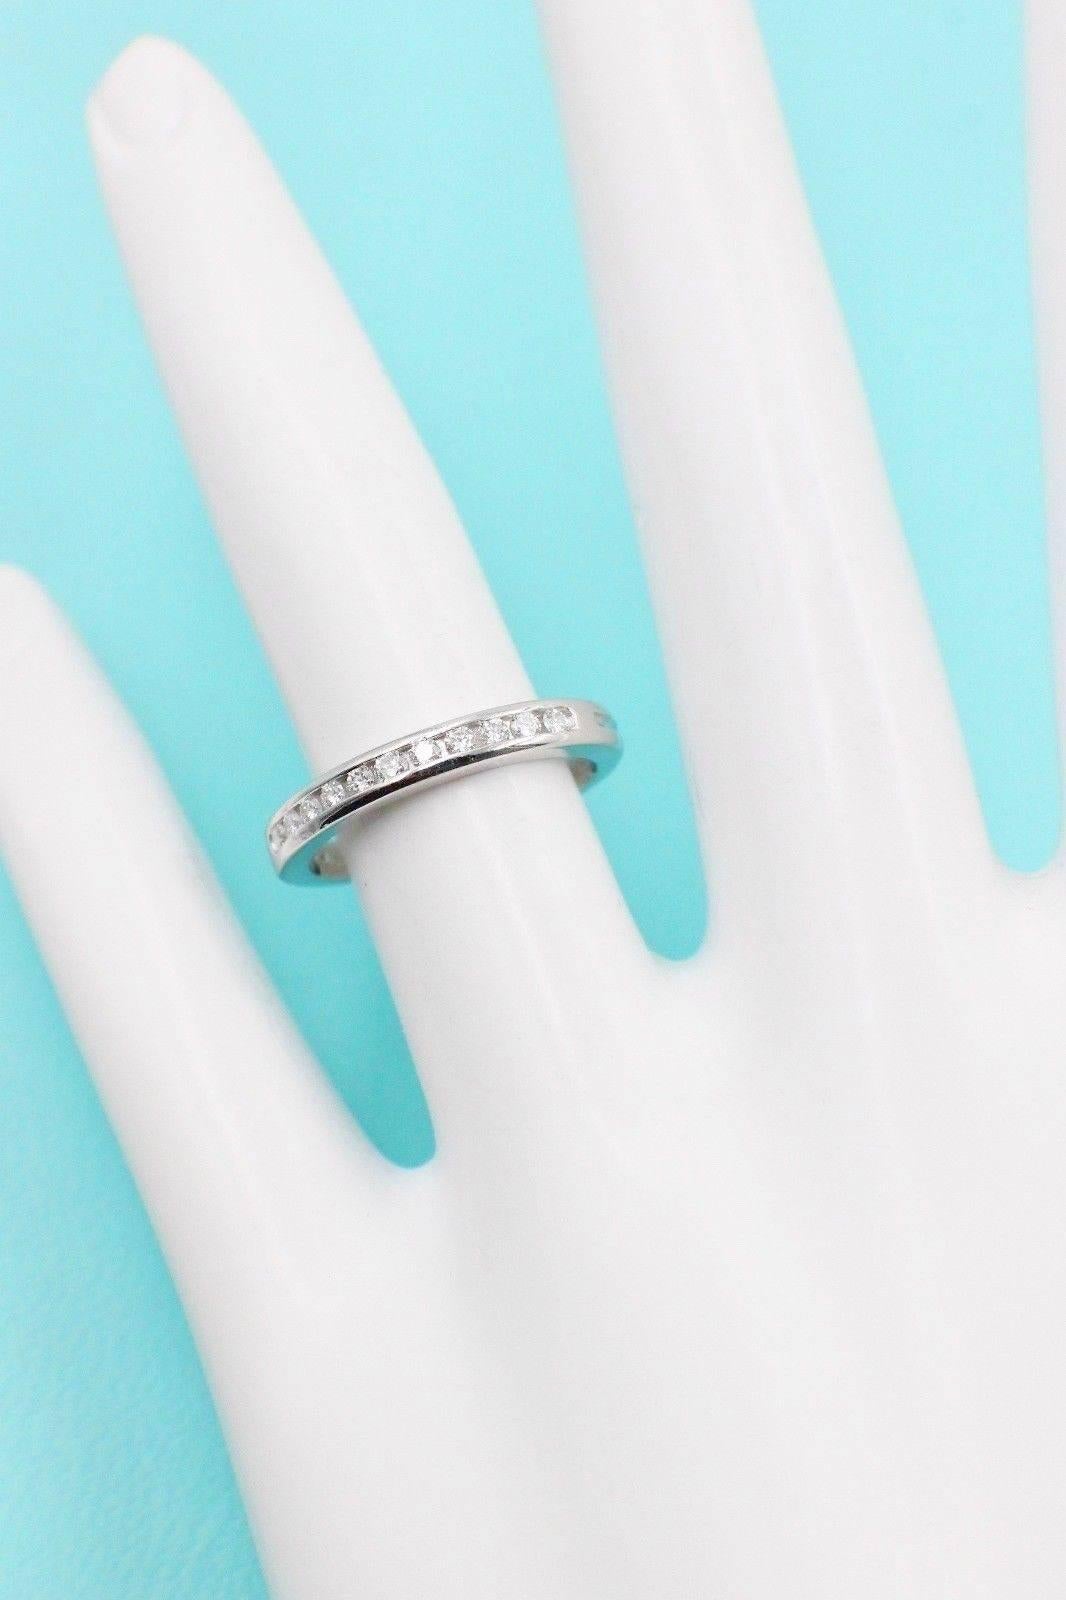 Tiffany & Co.
Style: Half Circle Diamond Wedding Band
Sku Number:  18408929
Size:  4 - sizable
Metal:  Platinum PT950
Total Carat Weight:  0.22 Cts.
Diamond Shape:  Round Brilliant 
Diamond Color & Clarity:  G-H  /  VVS-VS
Hallmark:  